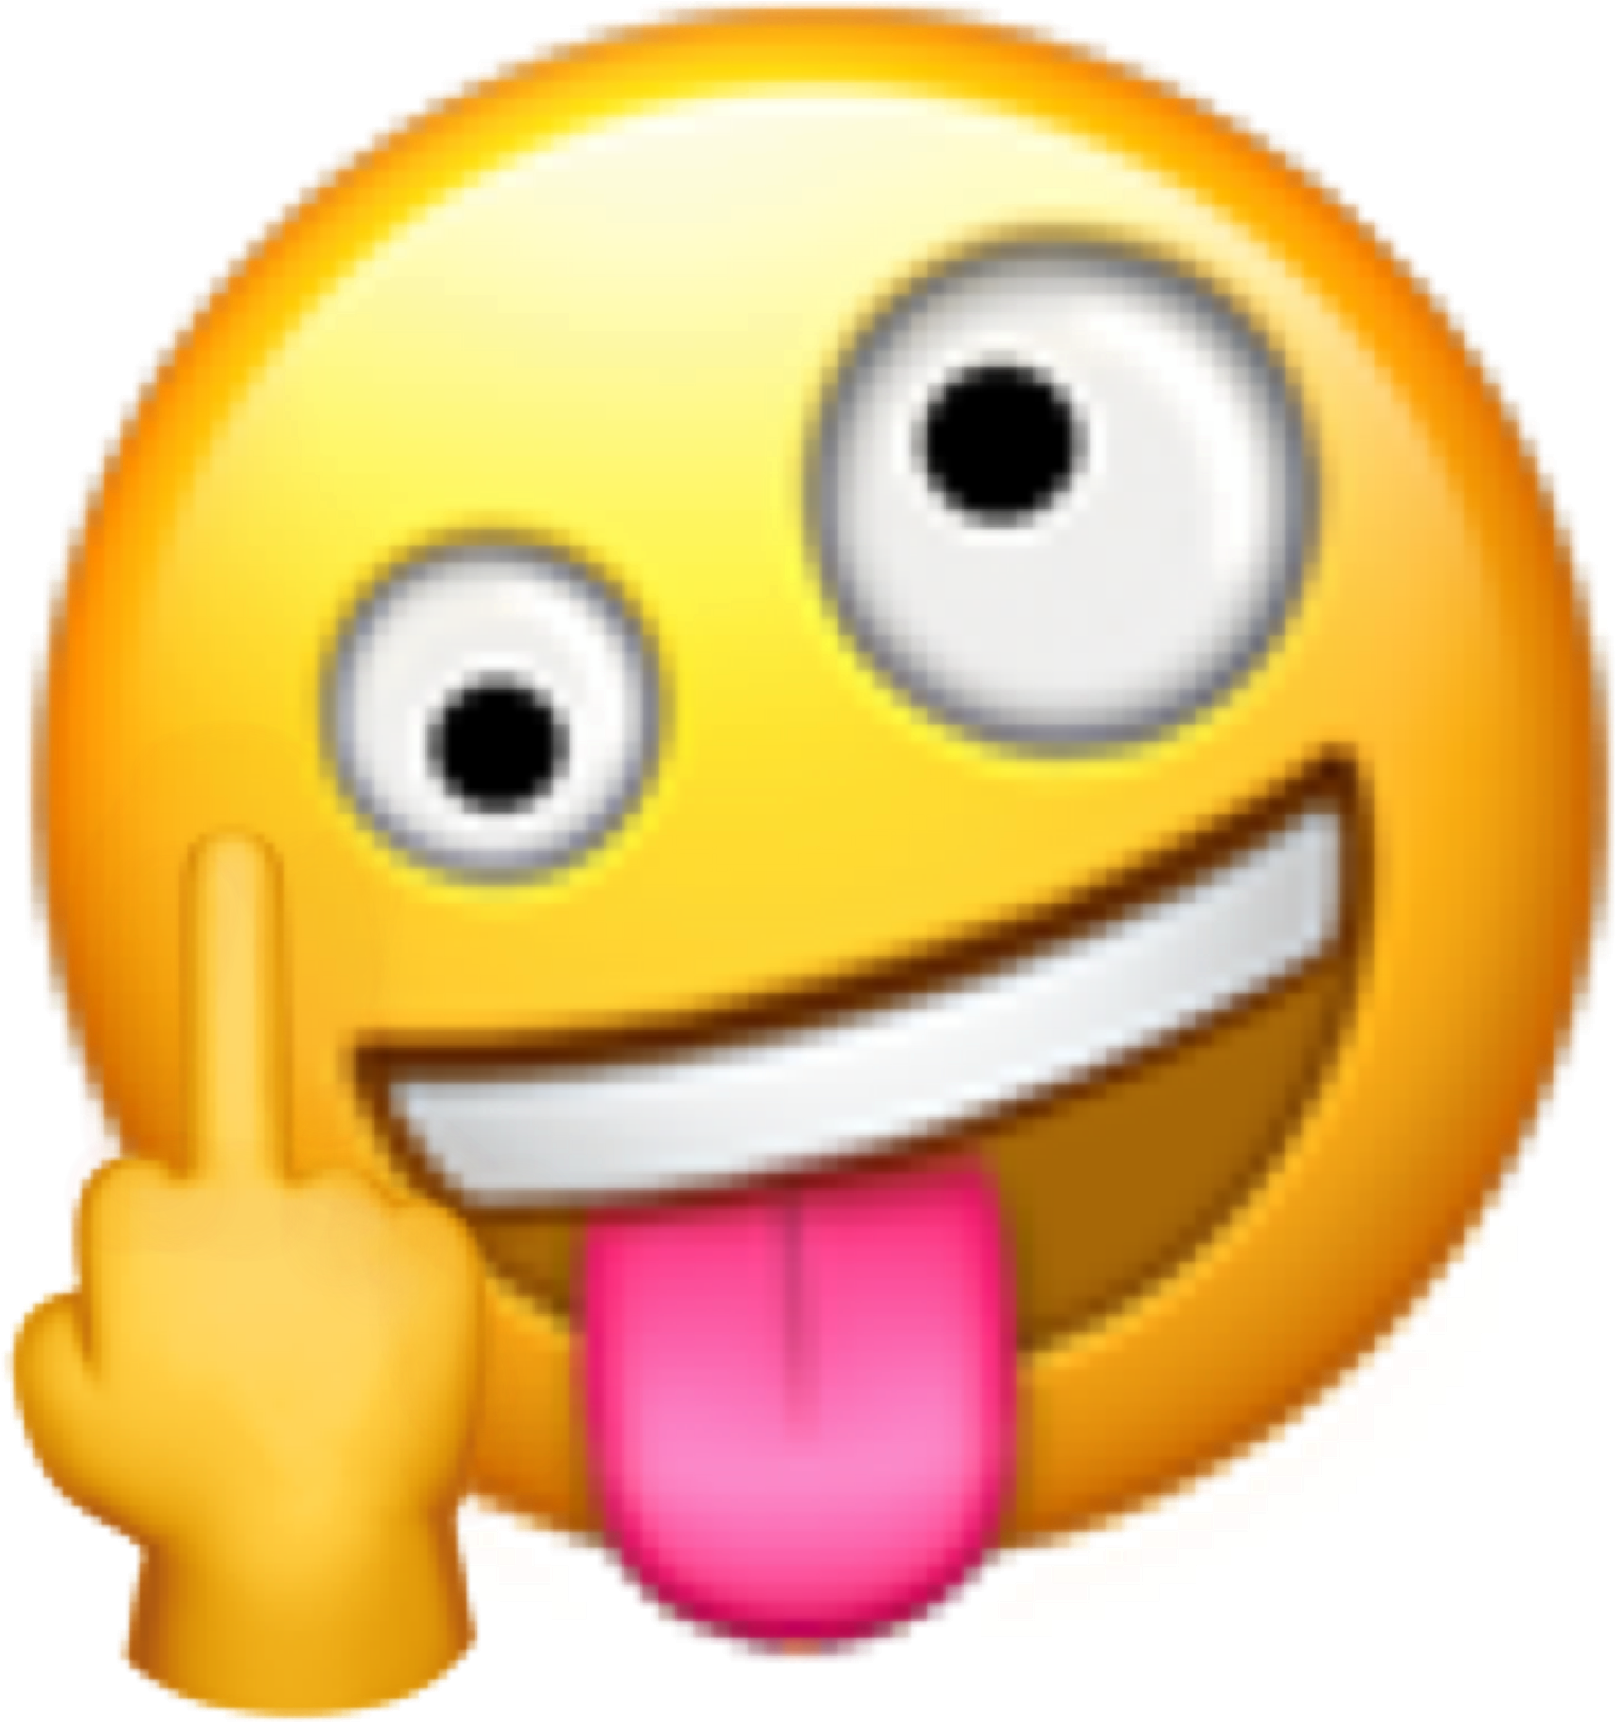 Shushing Face Emojiwith Tongue Out PNG image